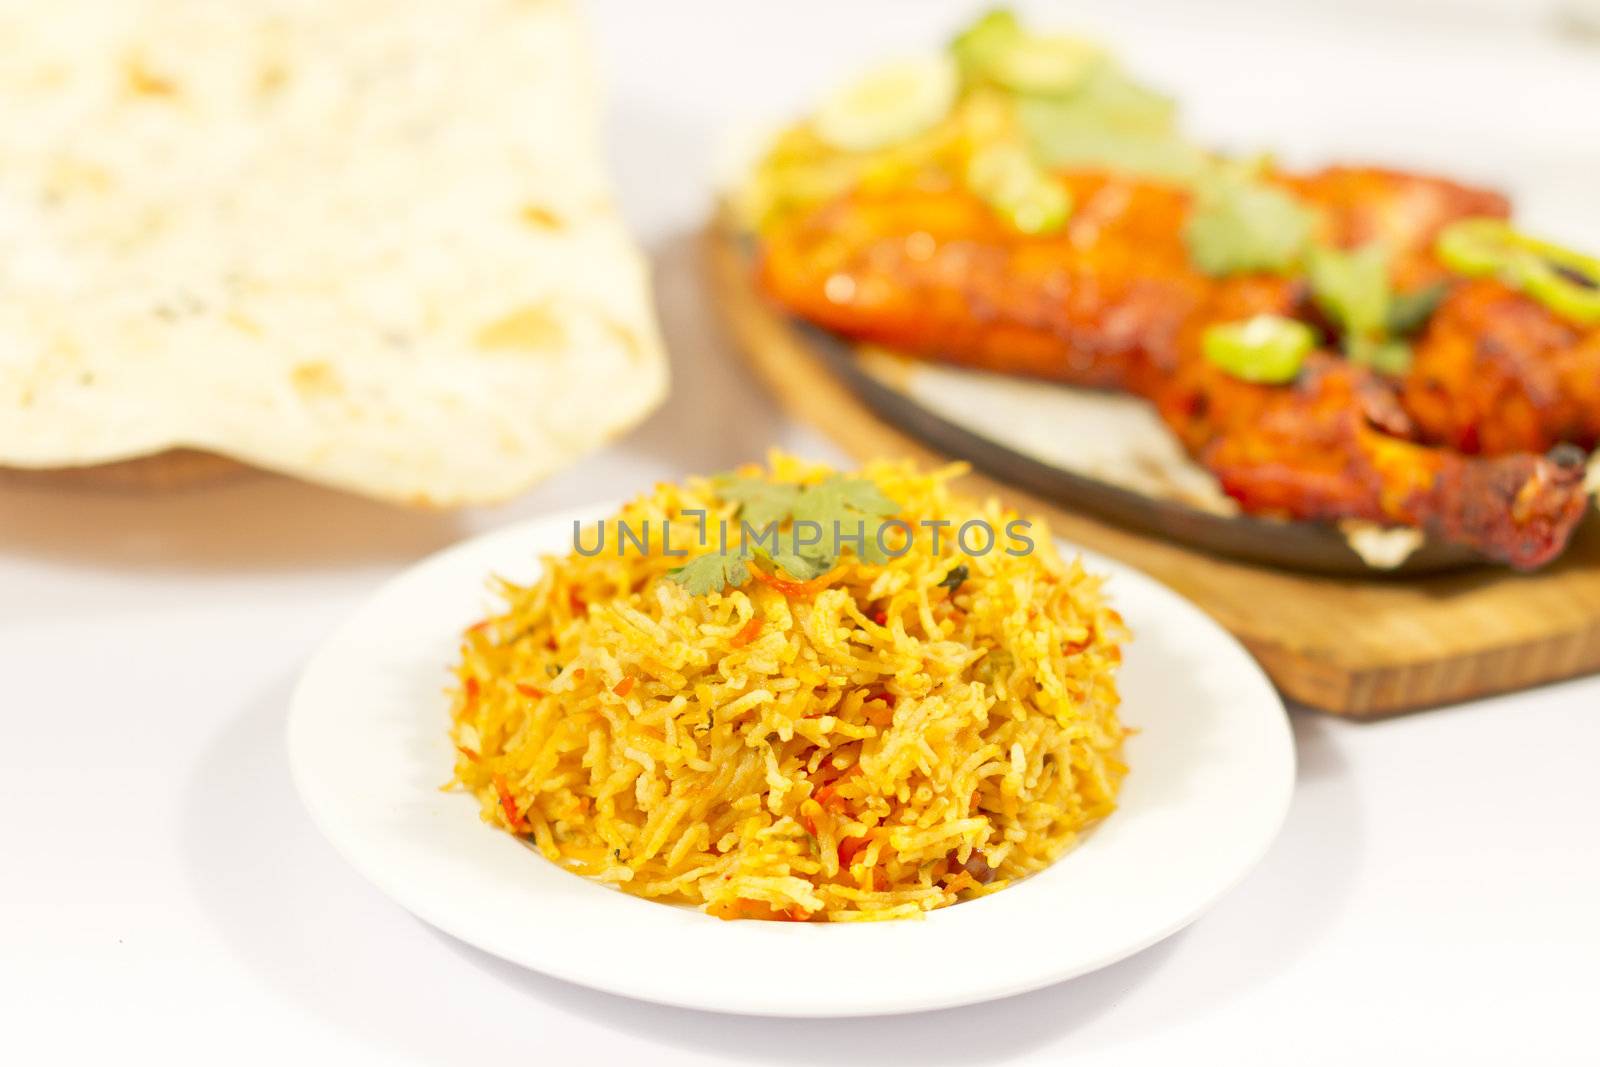 Indian Food Chicken Tandori and lassi